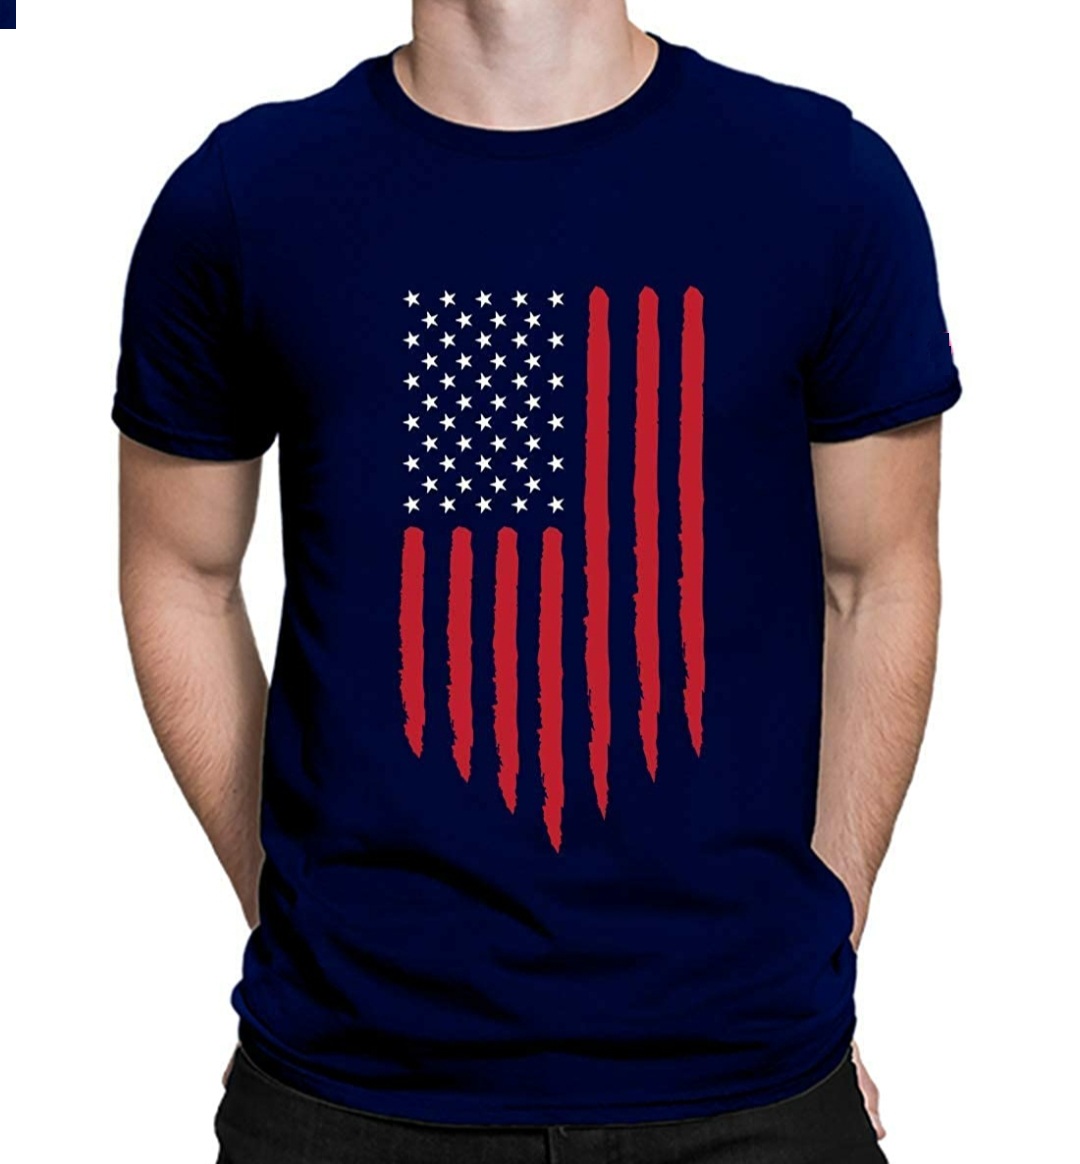 buy-ruggstar-branded-lycra-t-shirt-for-men-navy-striped-star-online